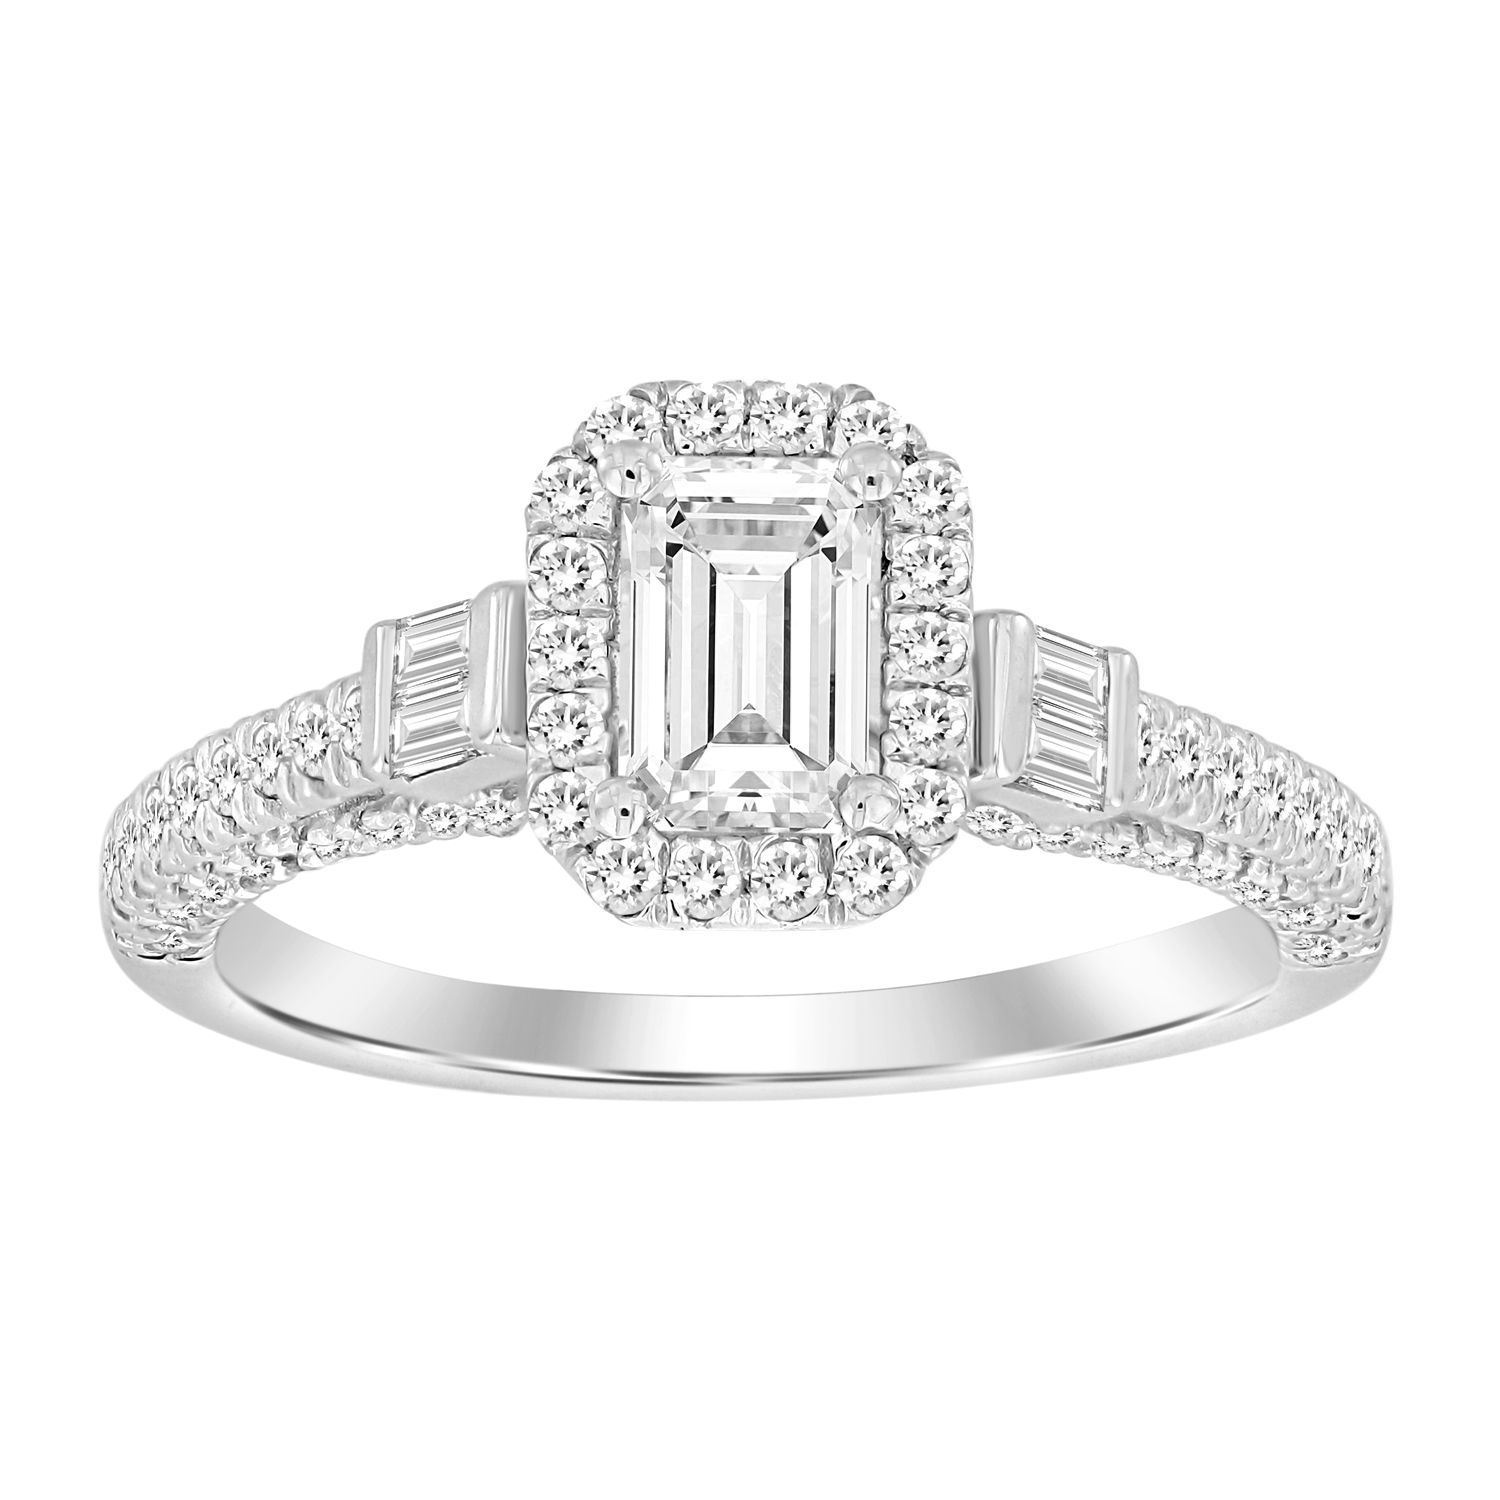 0019209 ladies ring 1 13 ct roundbaguetteemerald diamond 14k white gold center 34 si quality